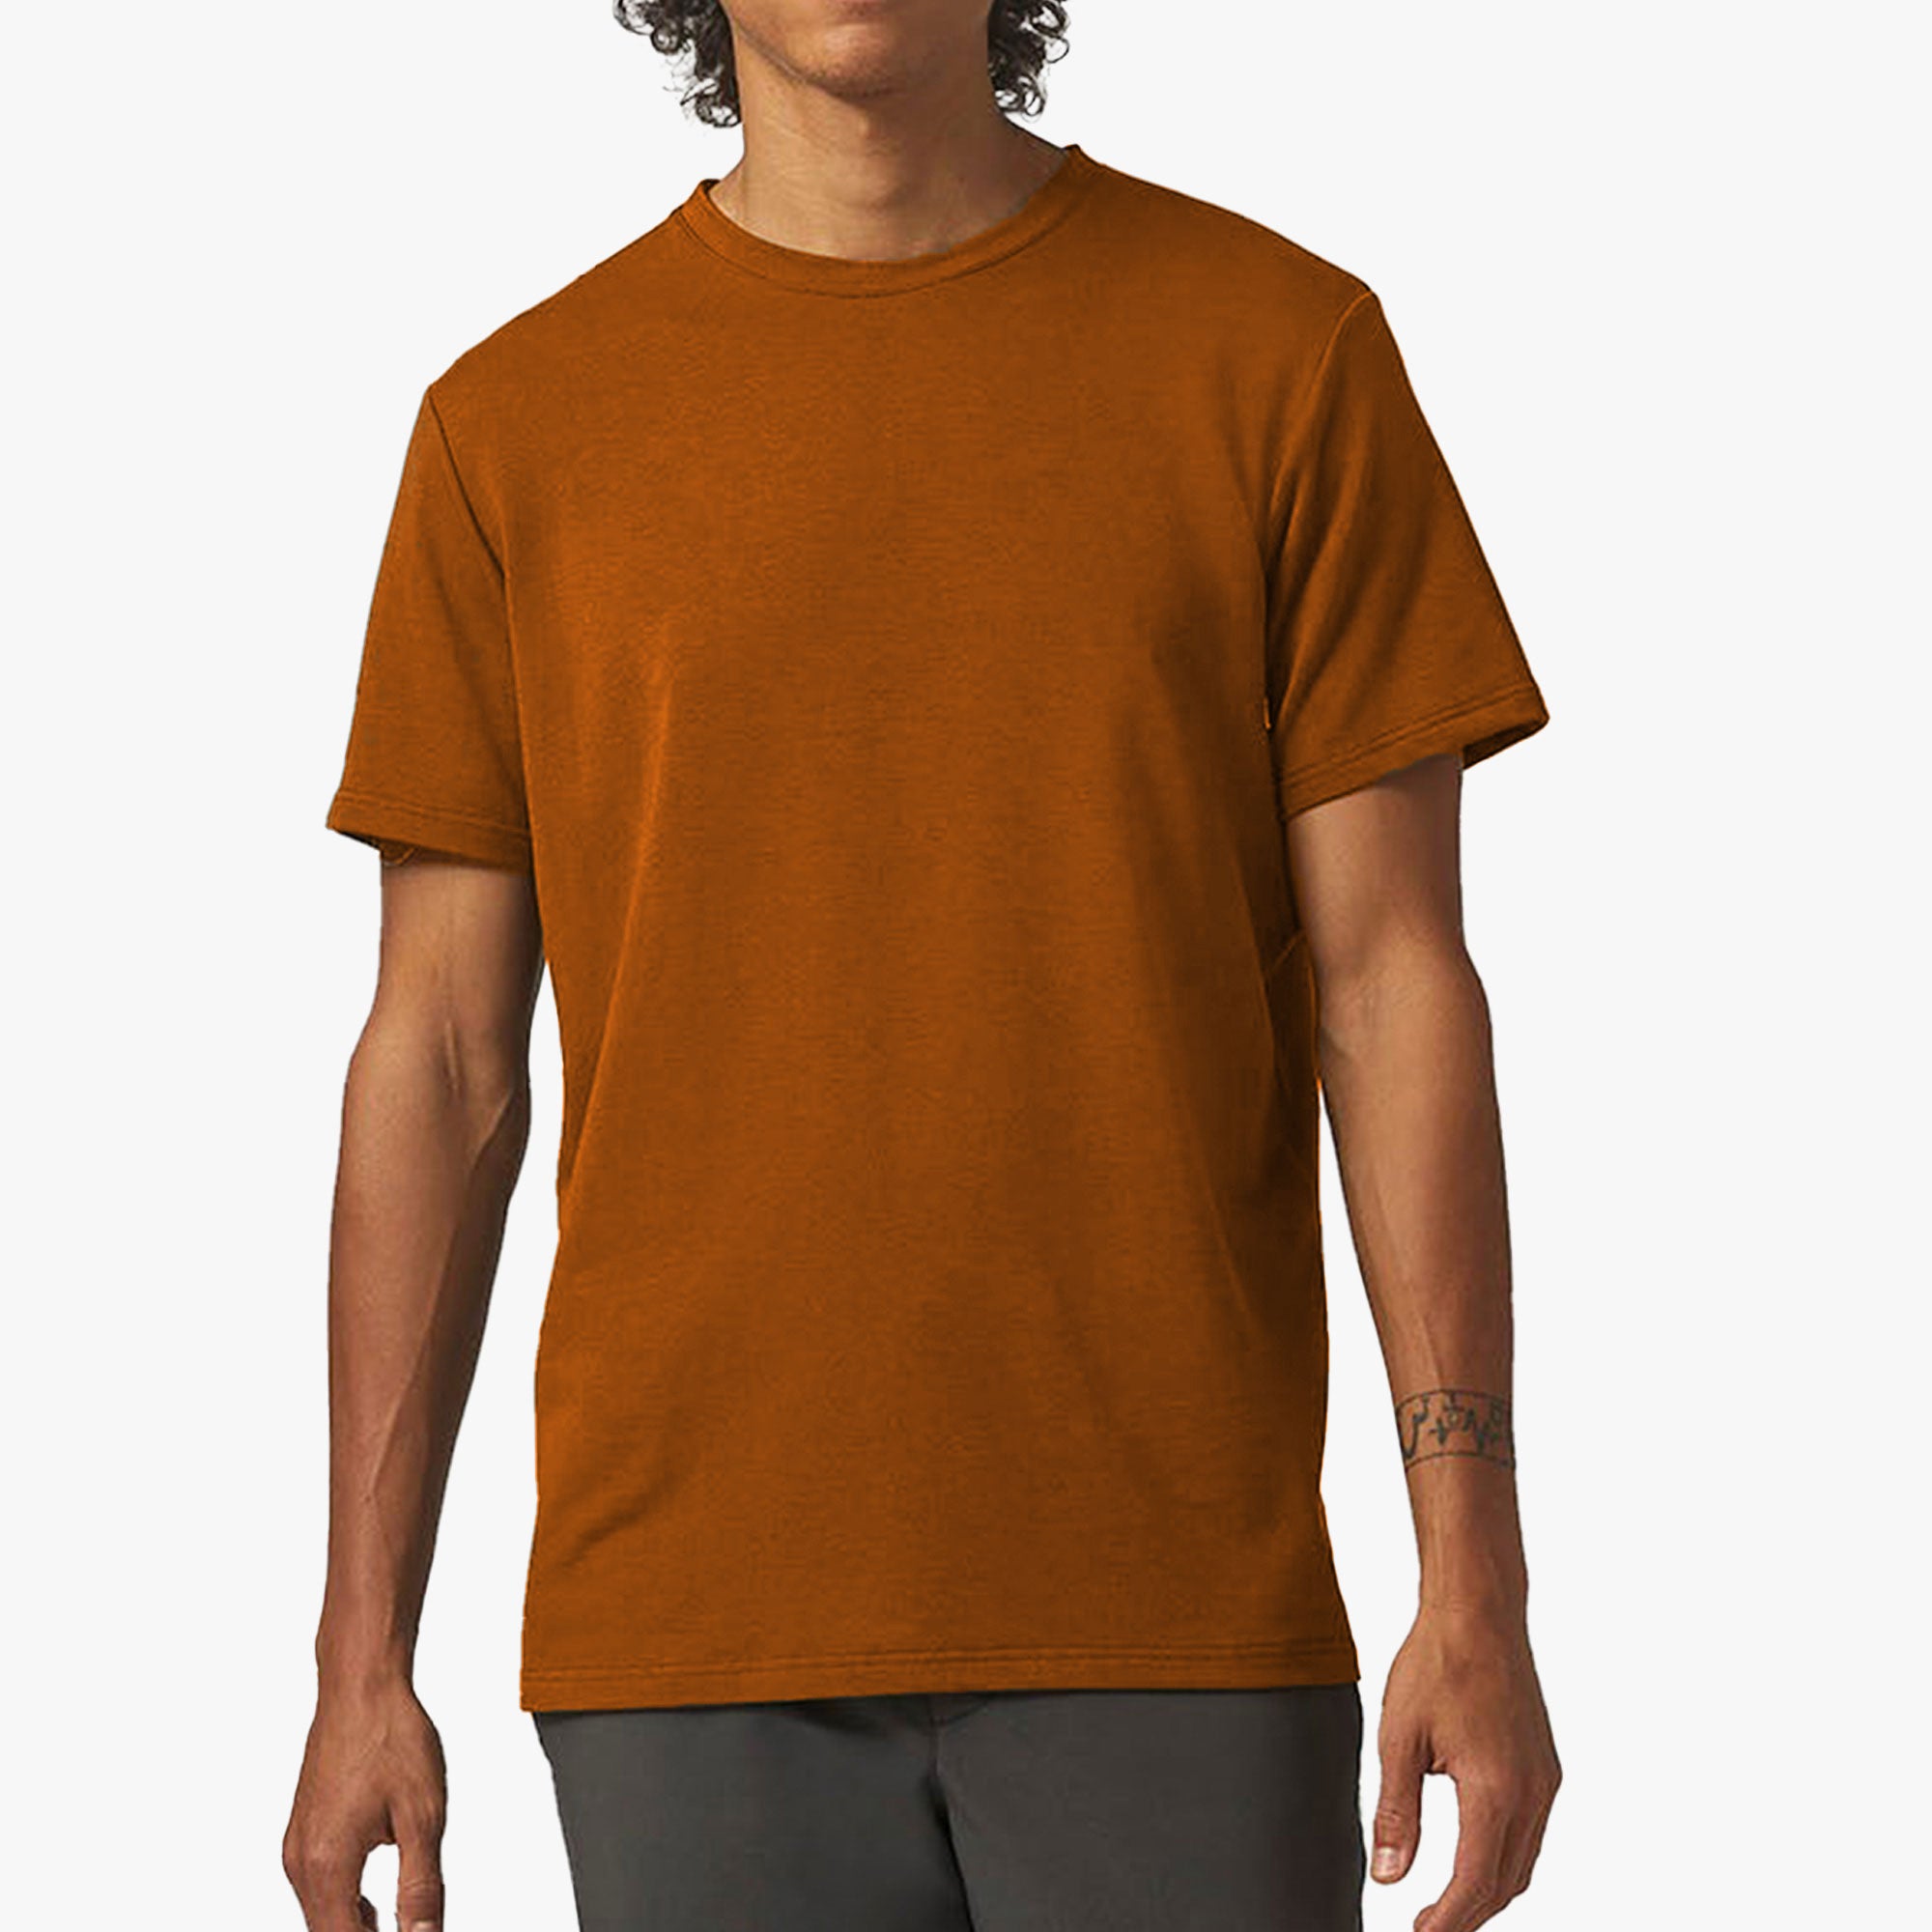 Adesso Man Bamboo T-Shirt - Orange Rust